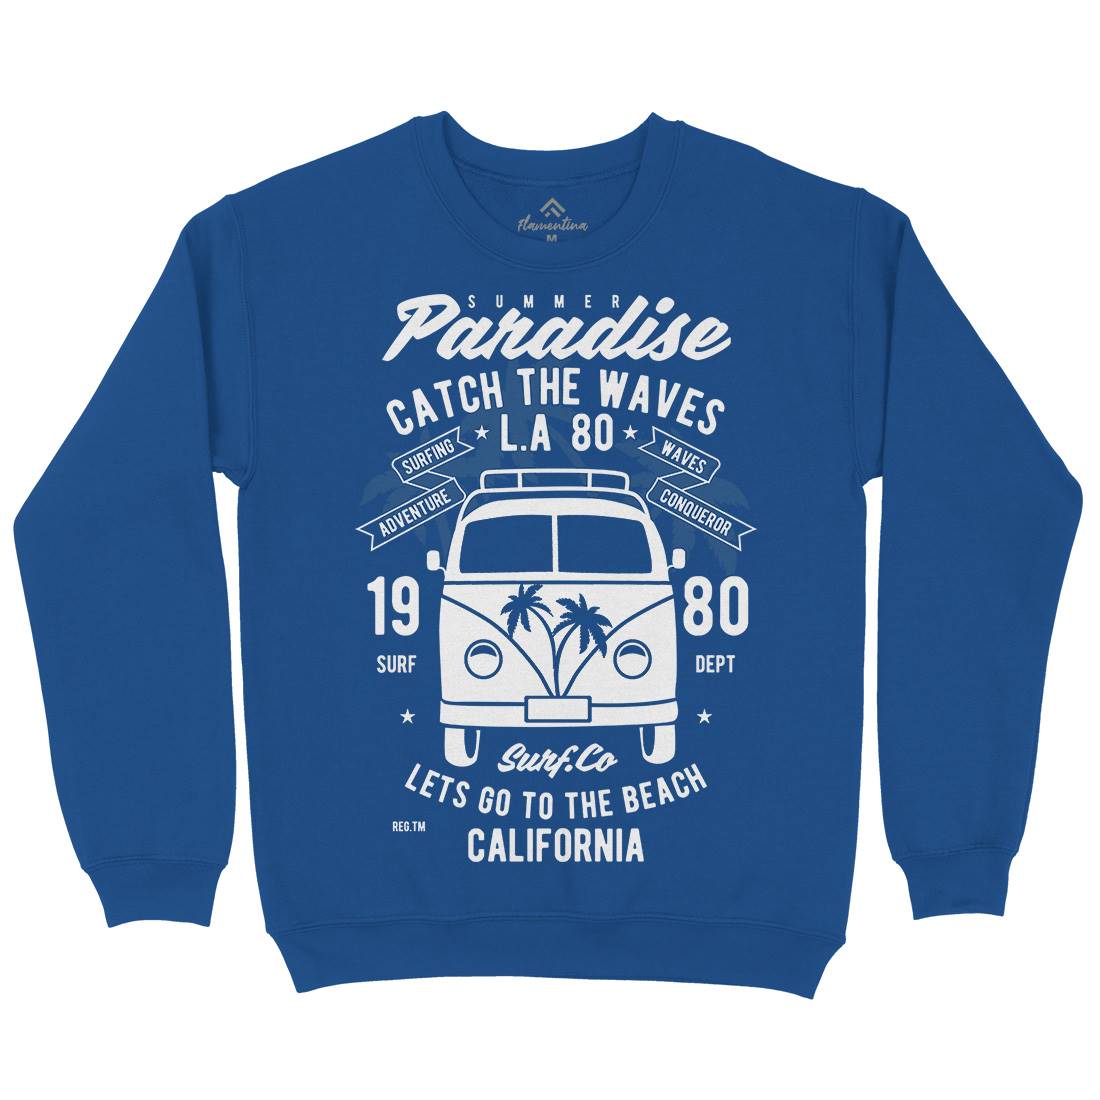 Catch The Waves Surfing Van Kids Crew Neck Sweatshirt Surf B393